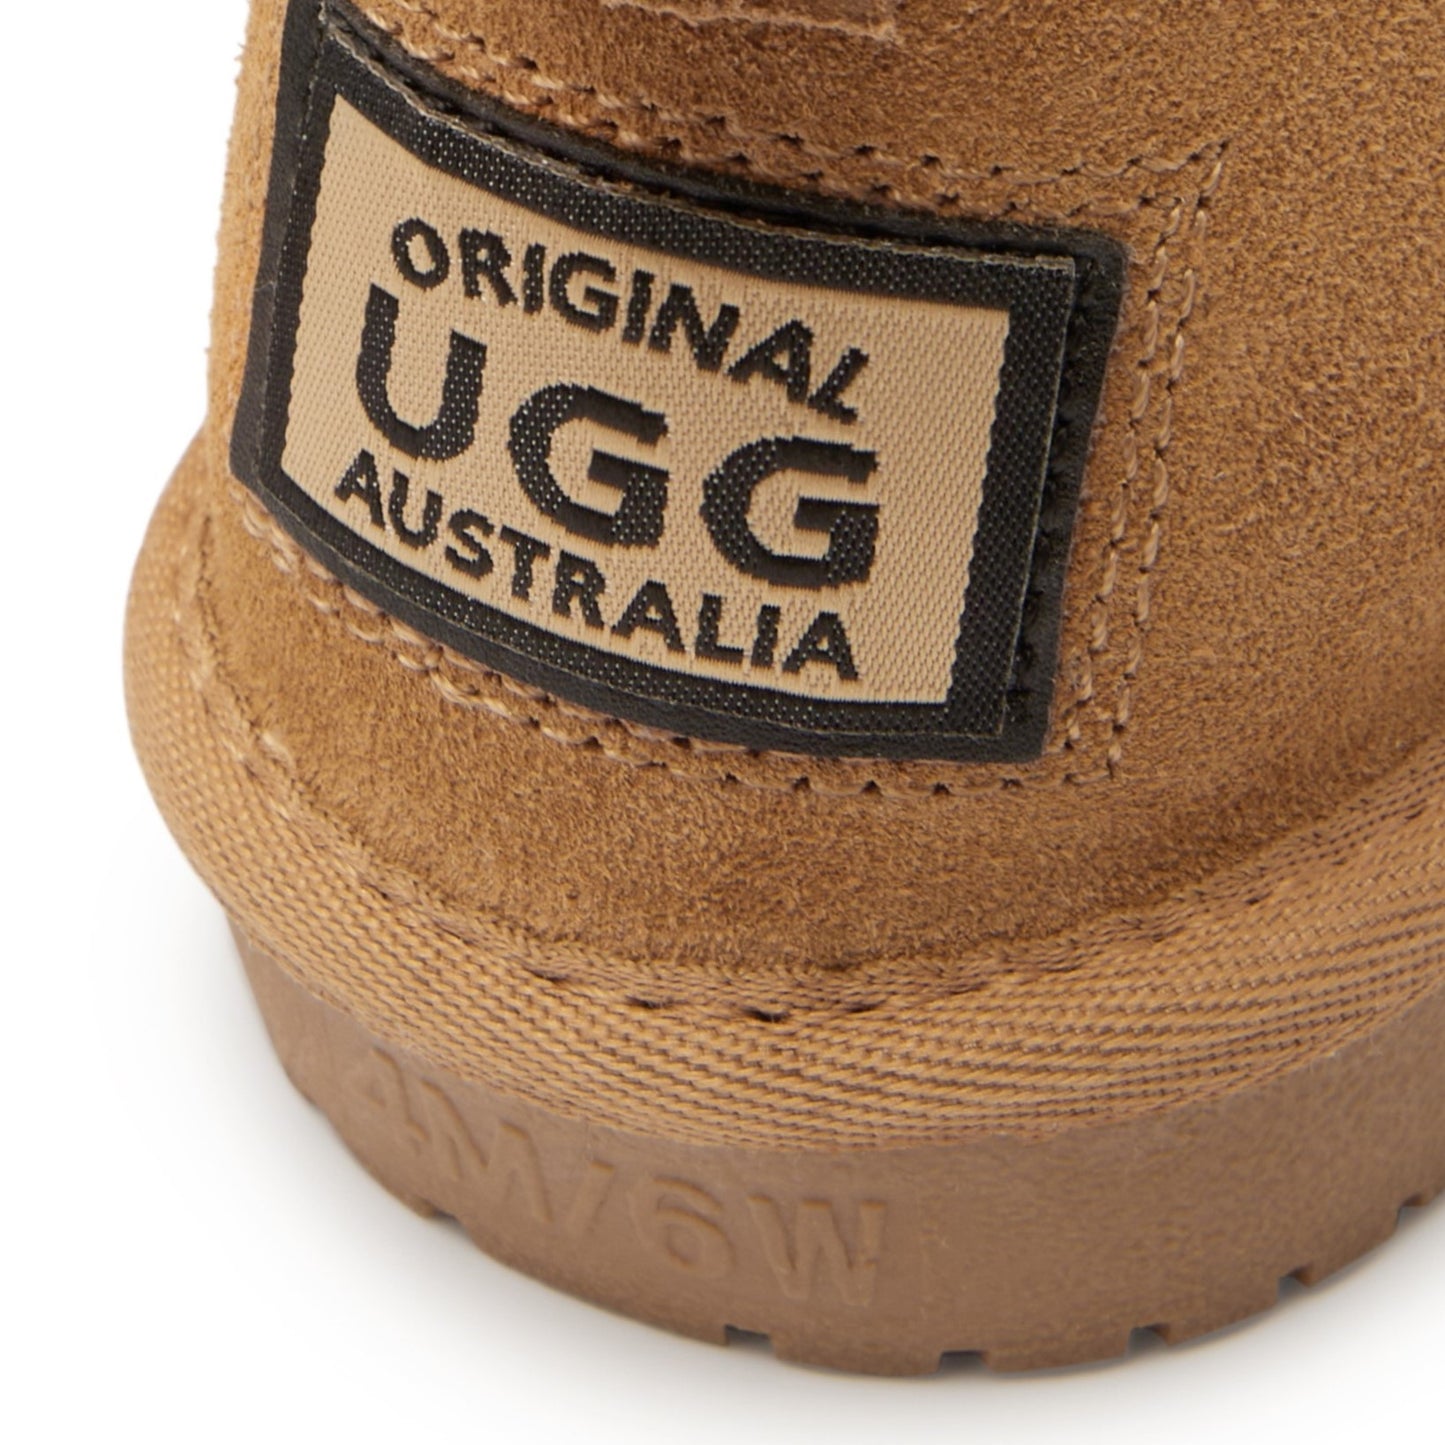 Originals Ugg Australia Zip Lace Long Boots Chestnut